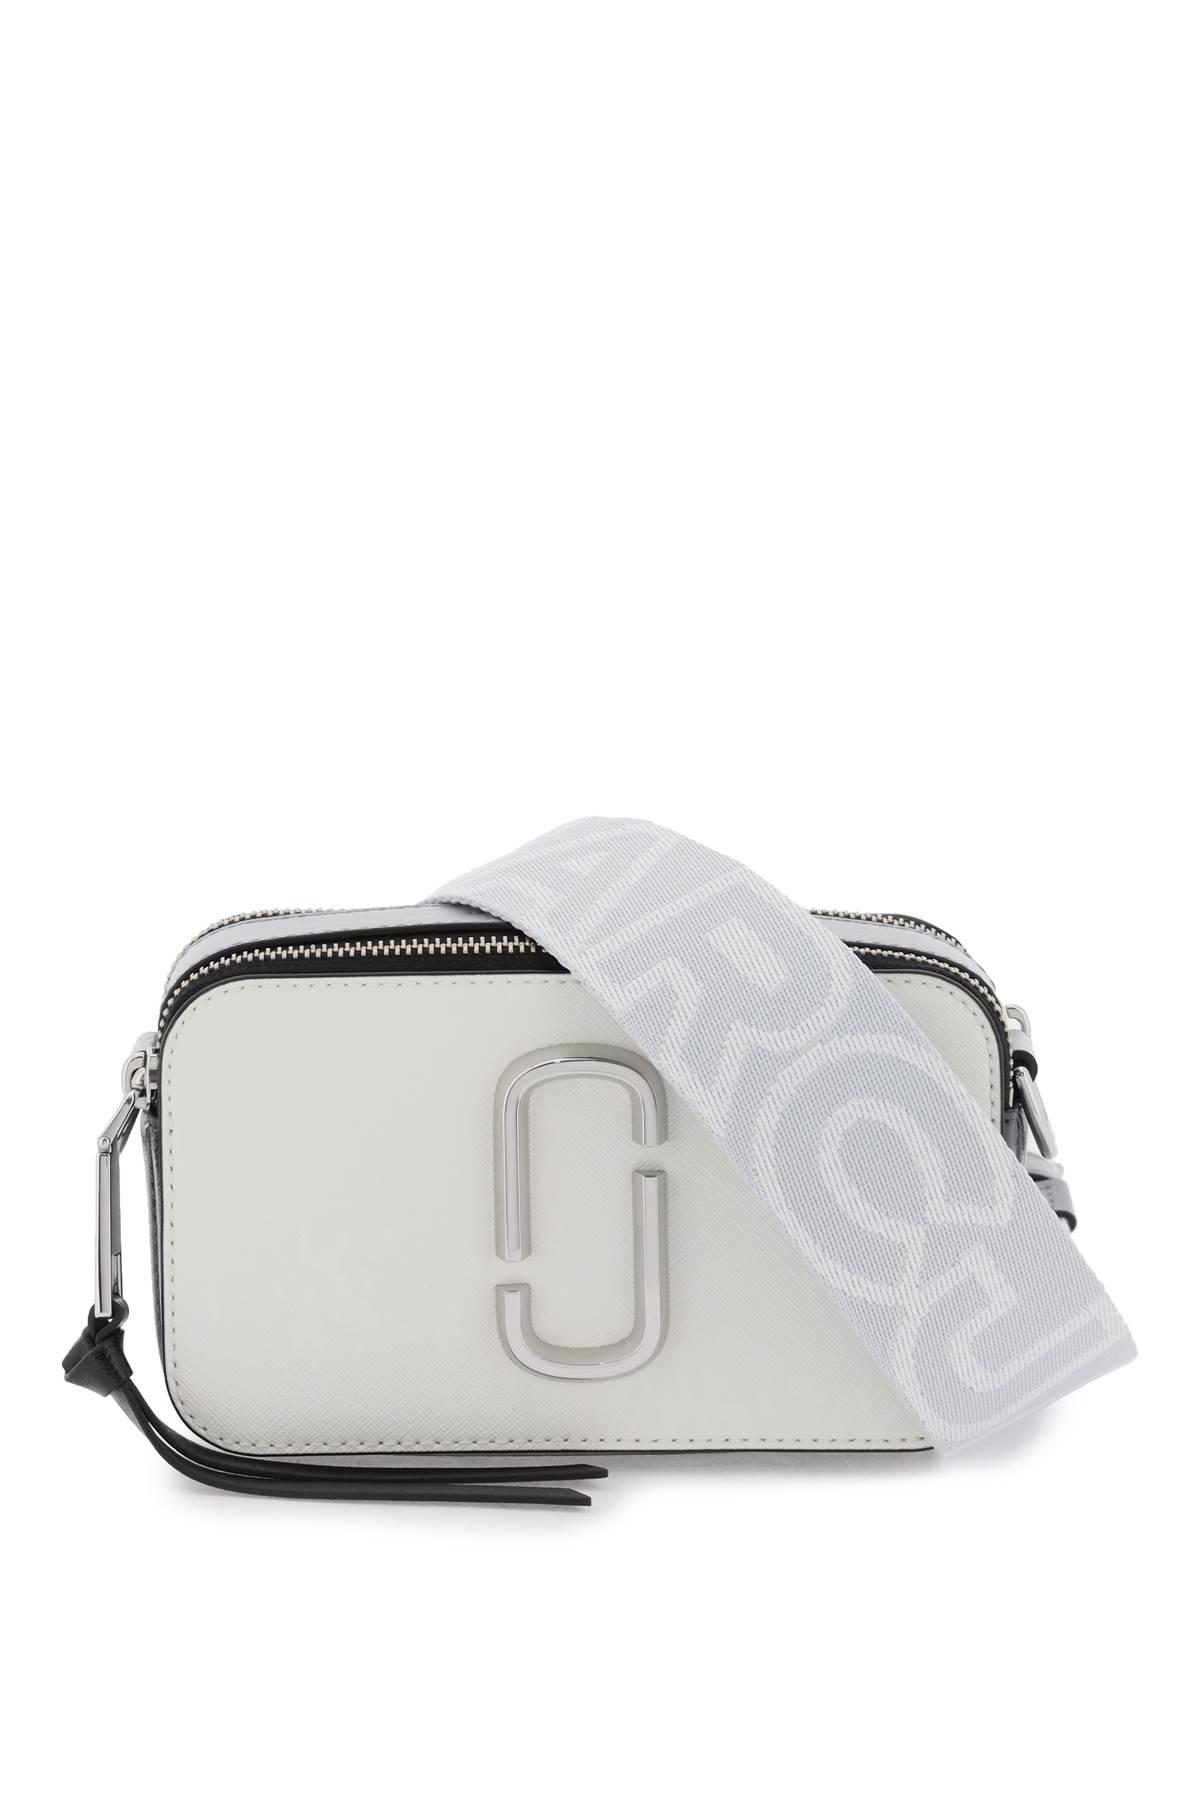 Marc Jacobs White Small Snapshot Camera Bag